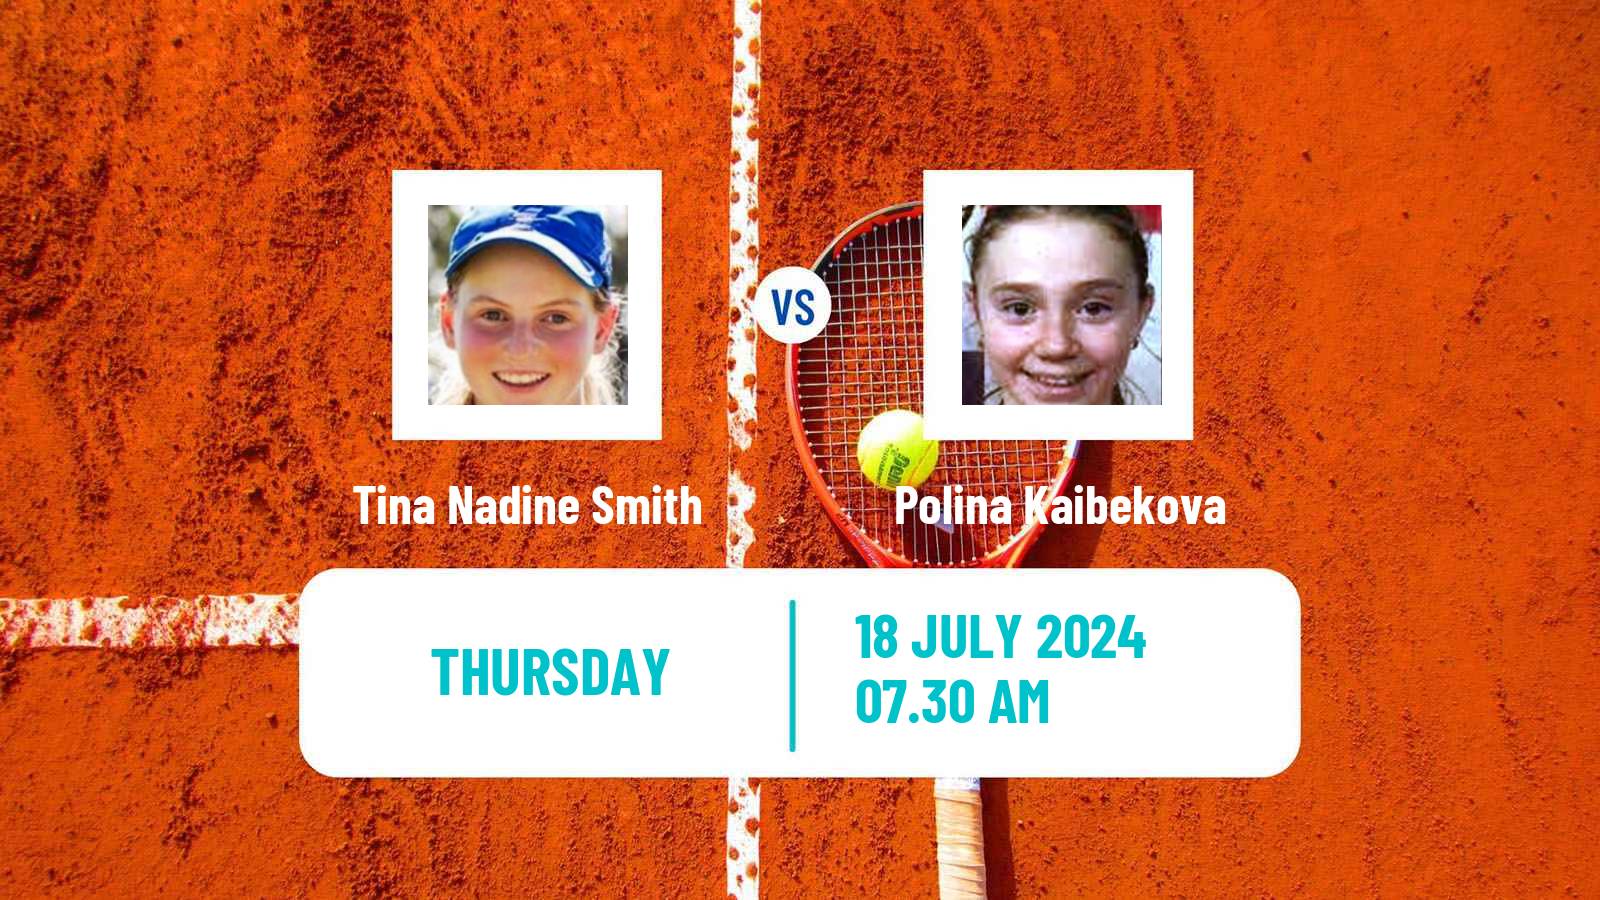 Tennis ITF W15 Casablanca Women Tina Nadine Smith - Polina Kaibekova